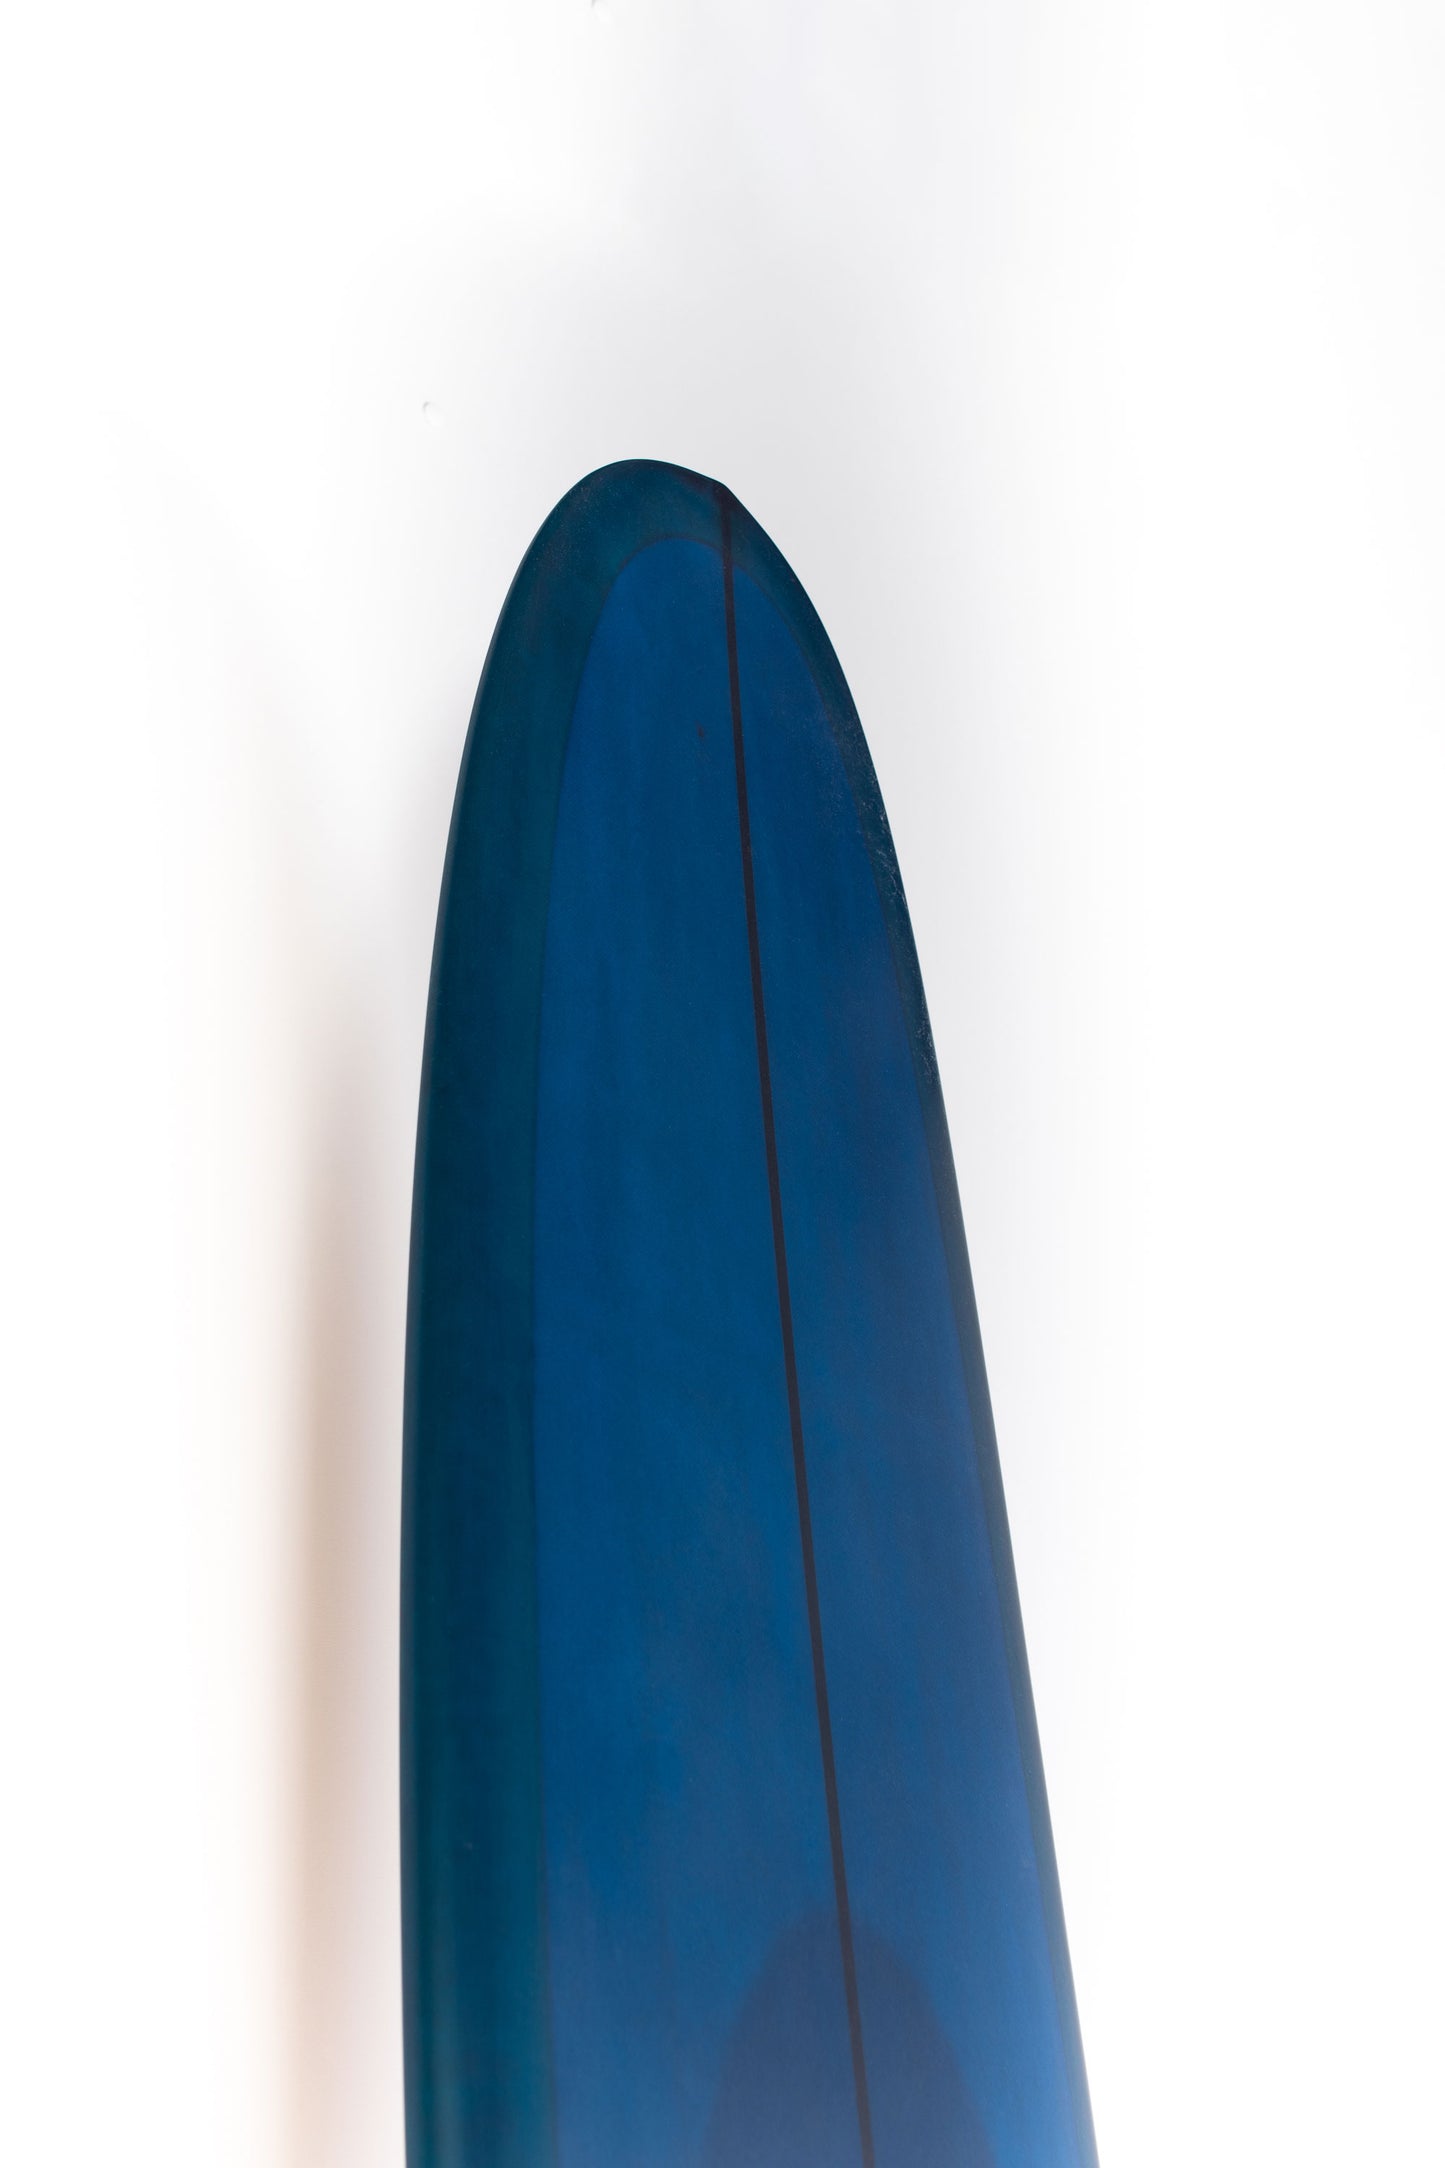 
                  
                    Pukas Surf Shop - Pukas Surfboards - MAYFLOWER by Axel Lorentz -  9'6" x 23 x 3,12 x 80L - AX09727
                  
                